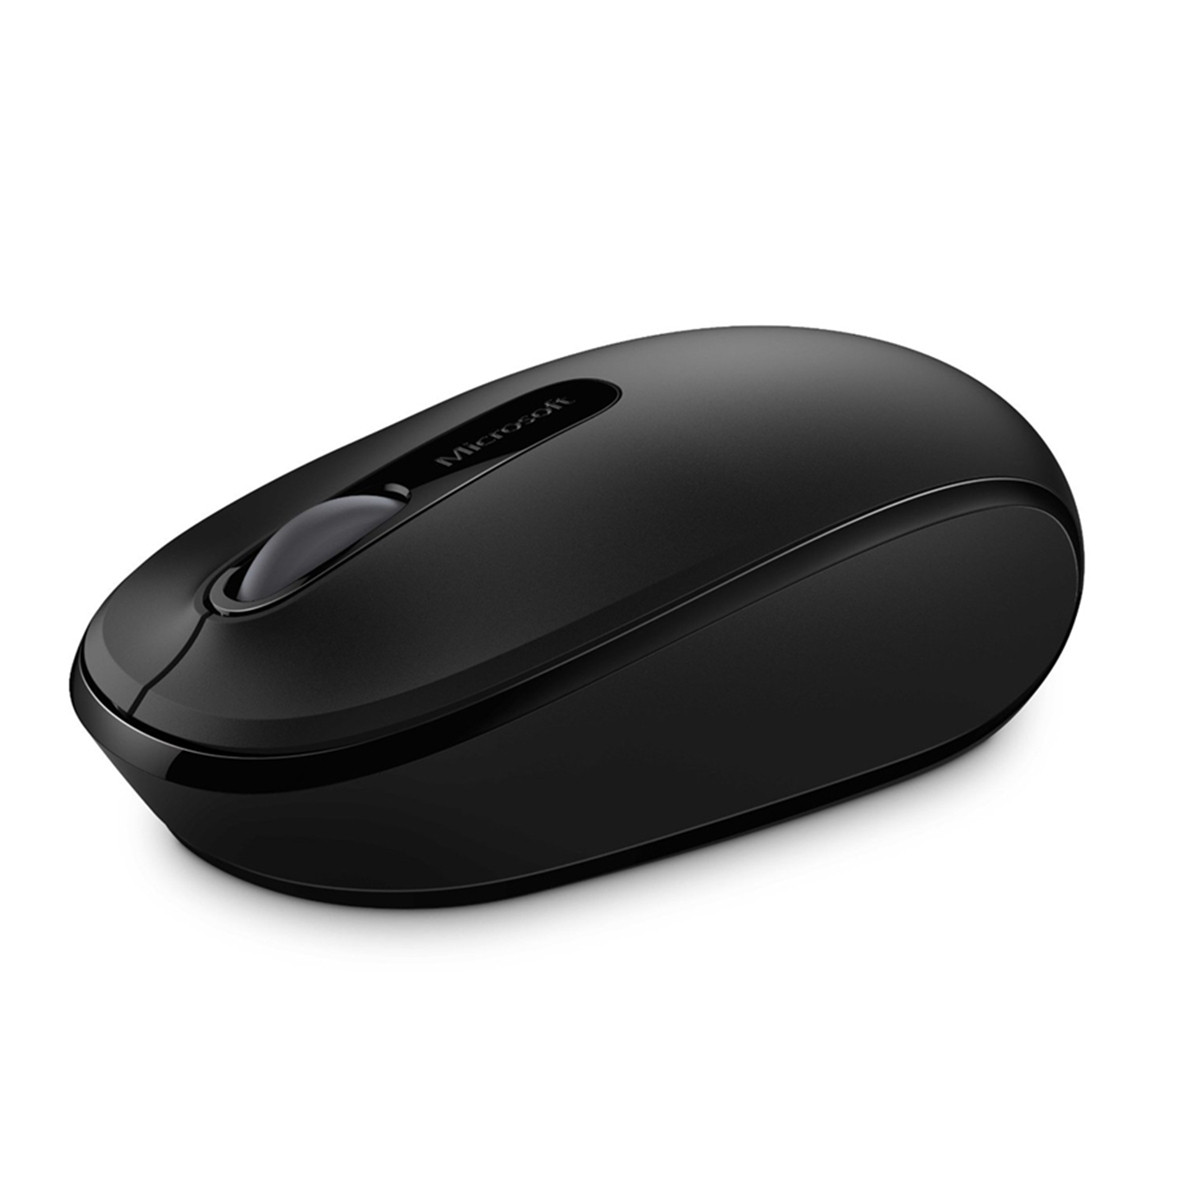 Mouse Microsoft Wireless Mobile 1850 Black | U7Z-00008